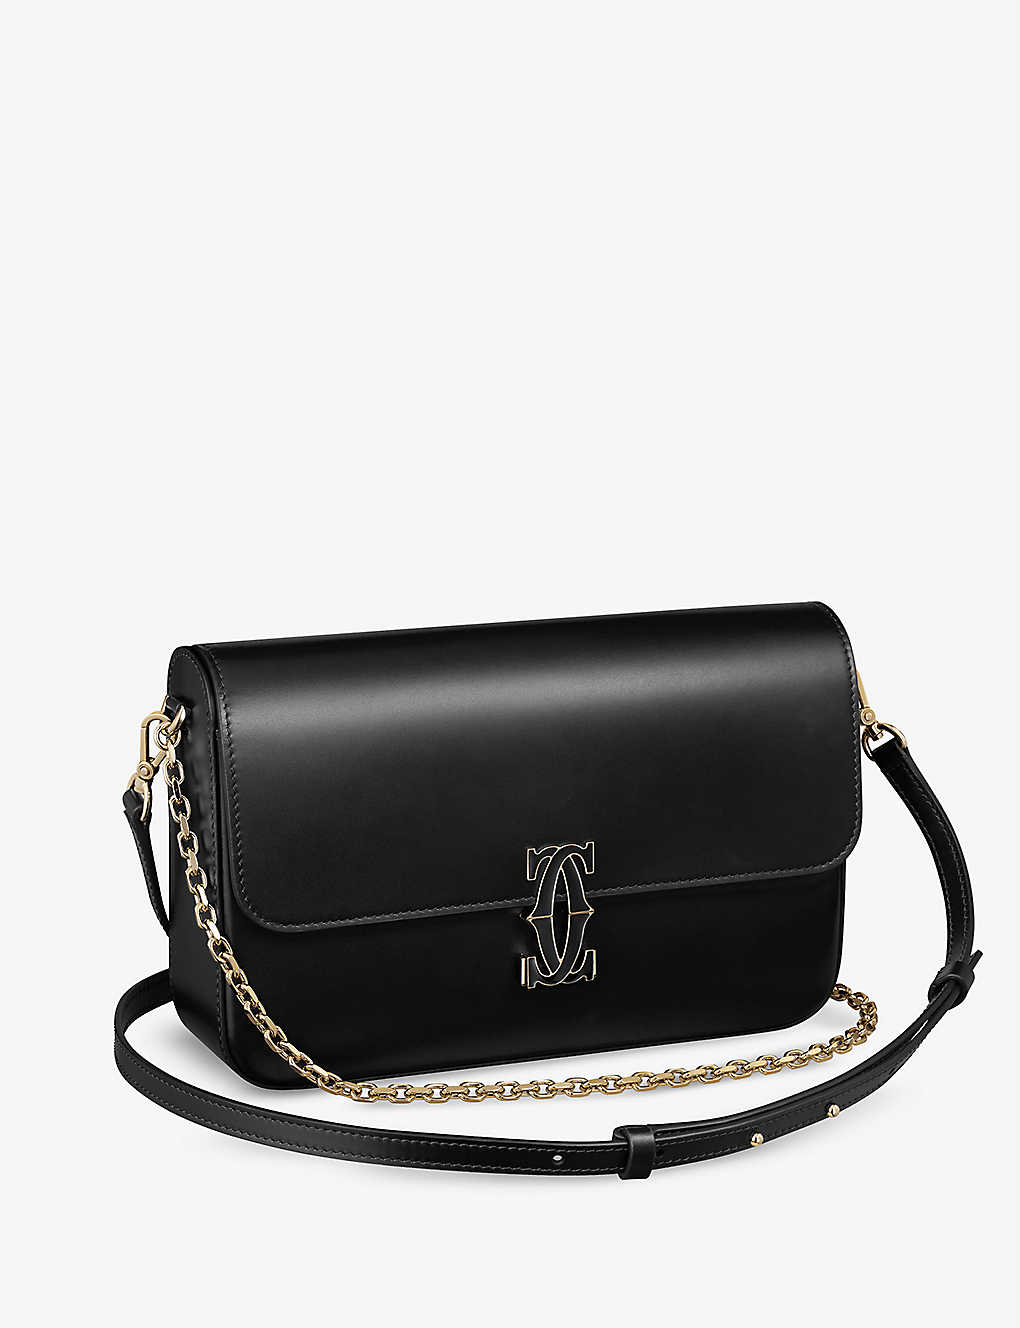 Cartier Womens Black Double C De Small Leather Cross-body Bag